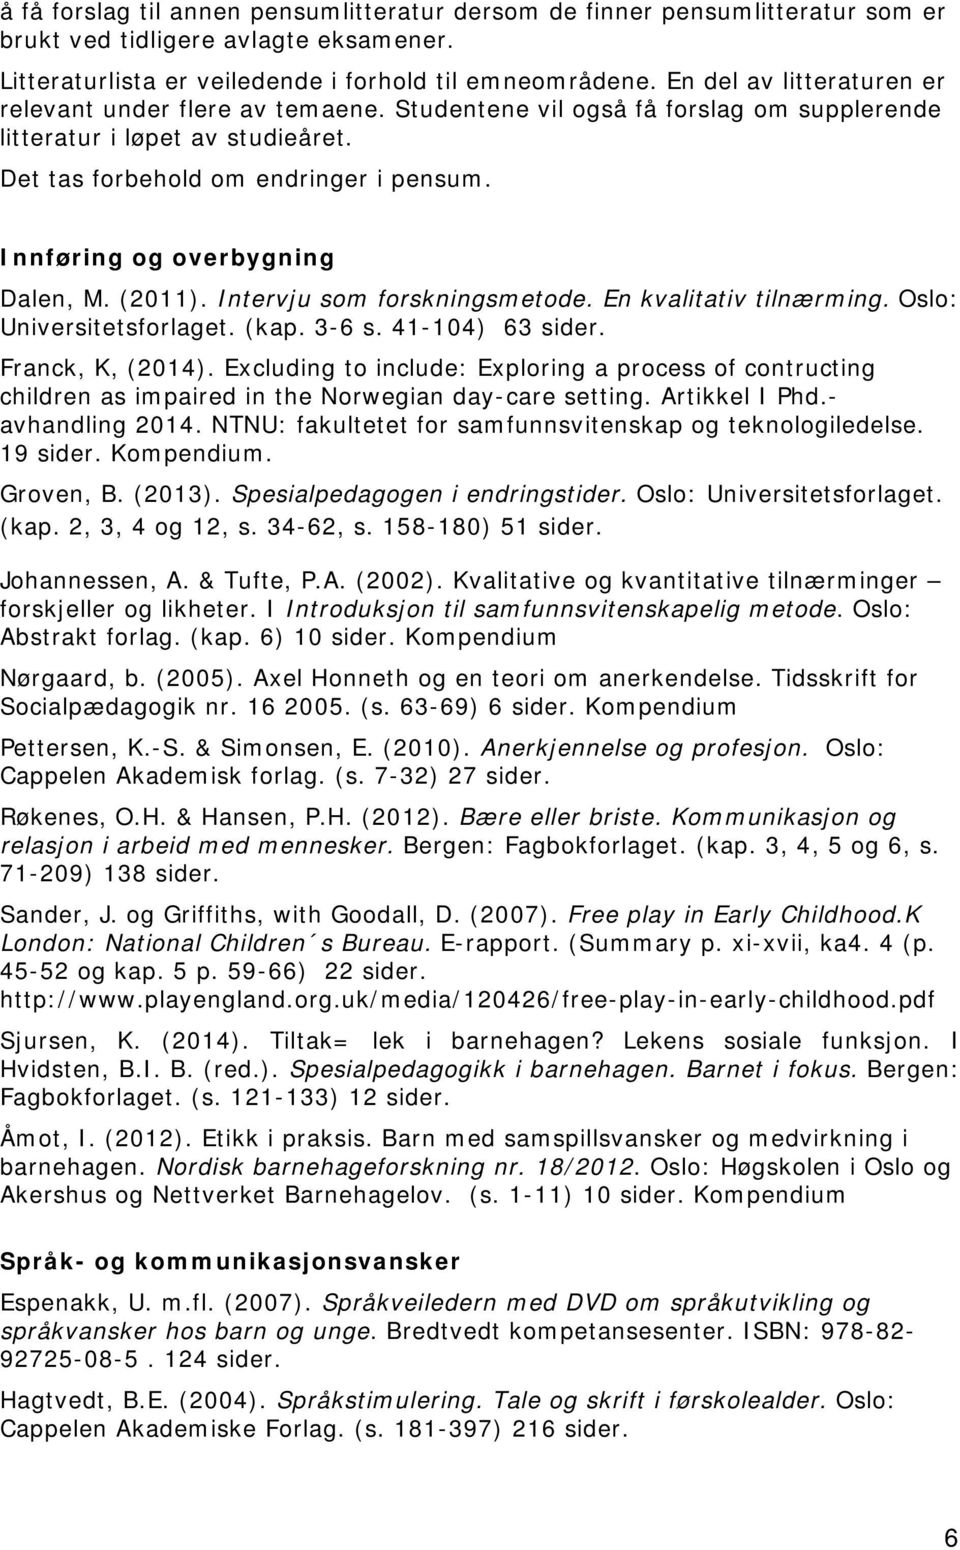 Innføring og overbygning Dalen, M. (2011). Intervju som forskningsmetode. En kvalitativ tilnærming. Oslo: Universitetsforlaget. (kap. 3-6 s. 41-104) 63 sider. Franck, K, (2014).